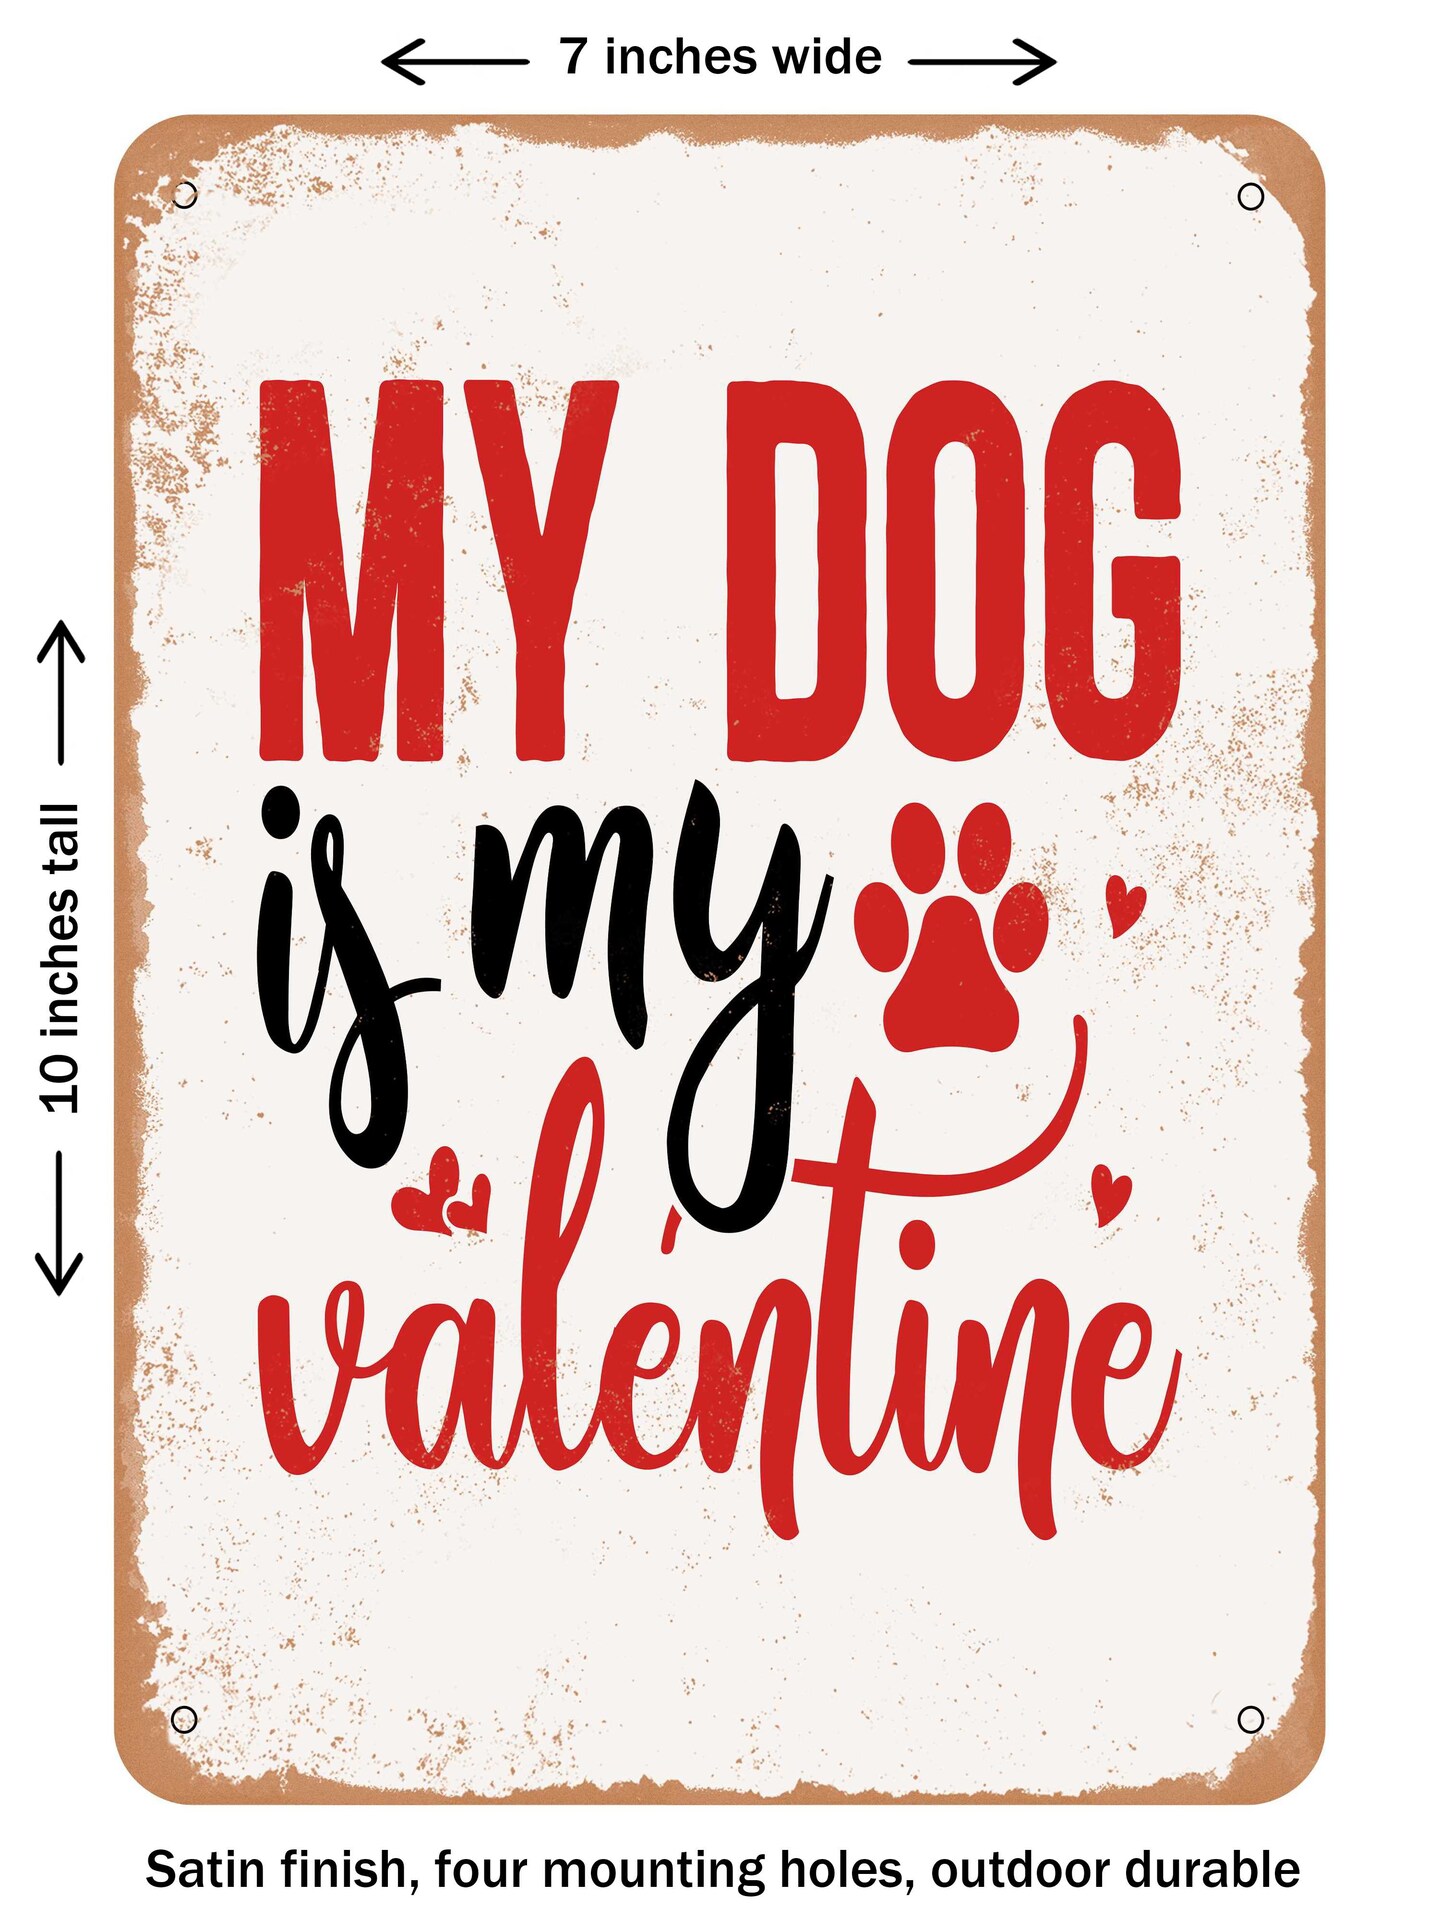 DECORATIVE METAL SIGN - My Dog is My Valentine - 2 - Vintage Rusty Look